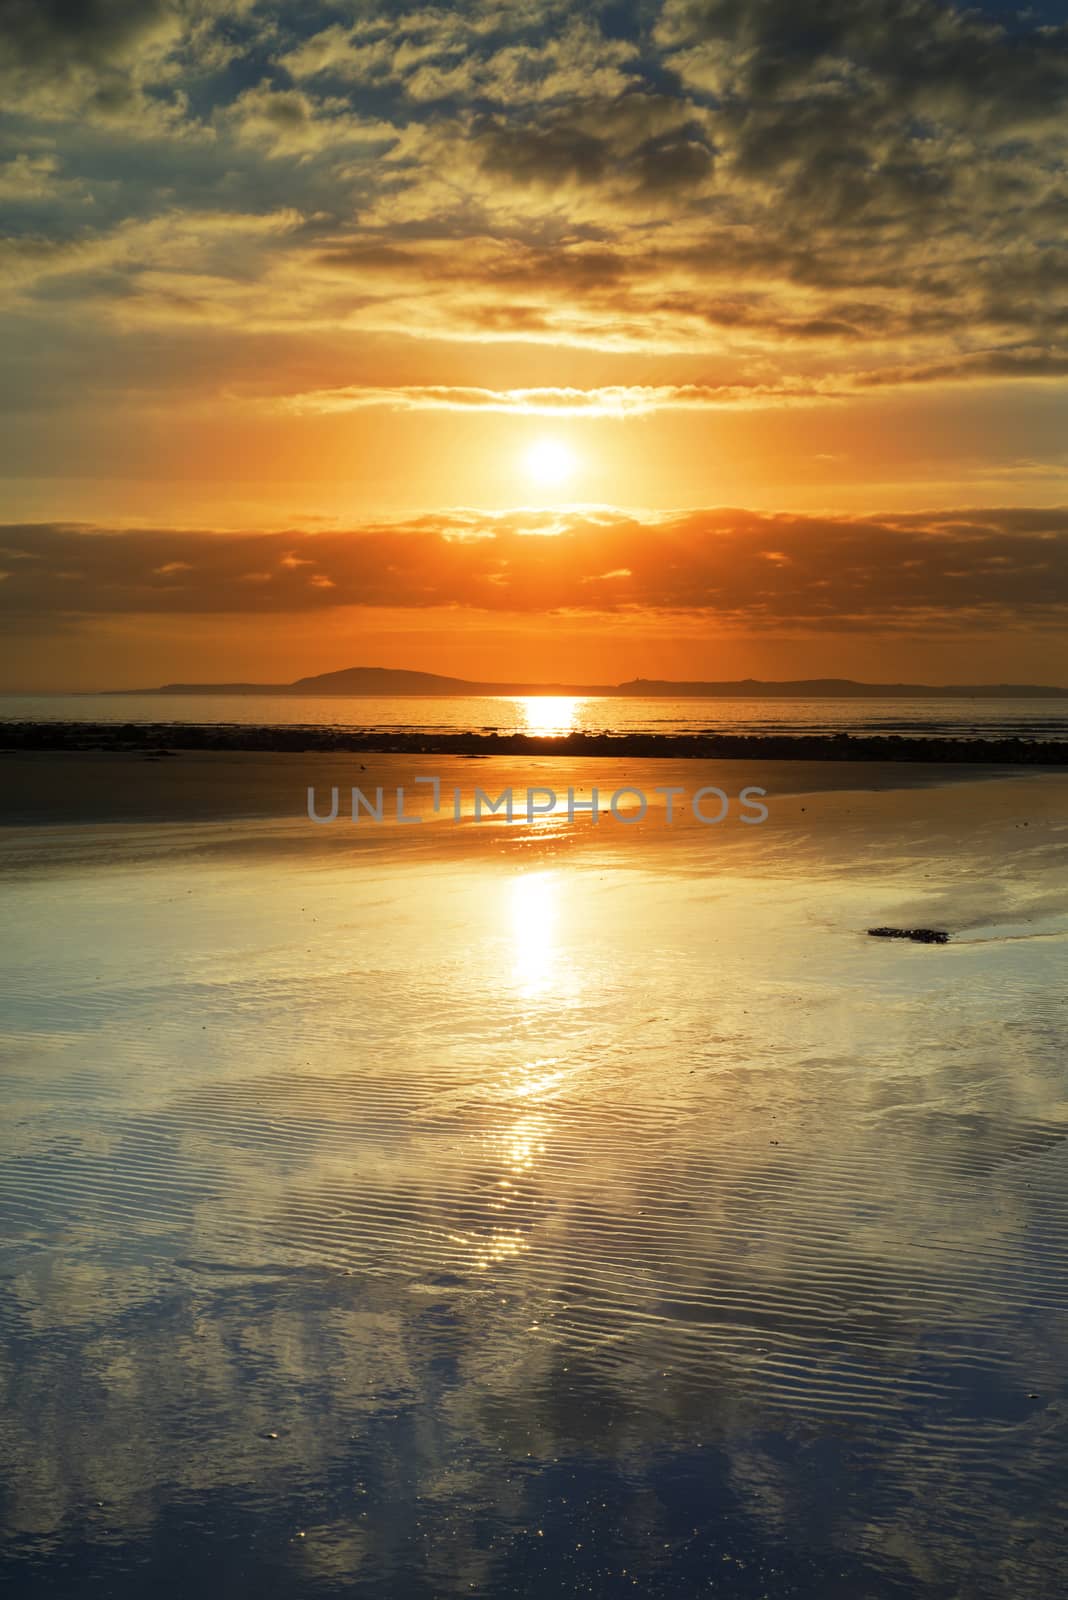 reflections at beal beach near ballybunion on the wild atlantic way ireland with a beautiful yellow sunset